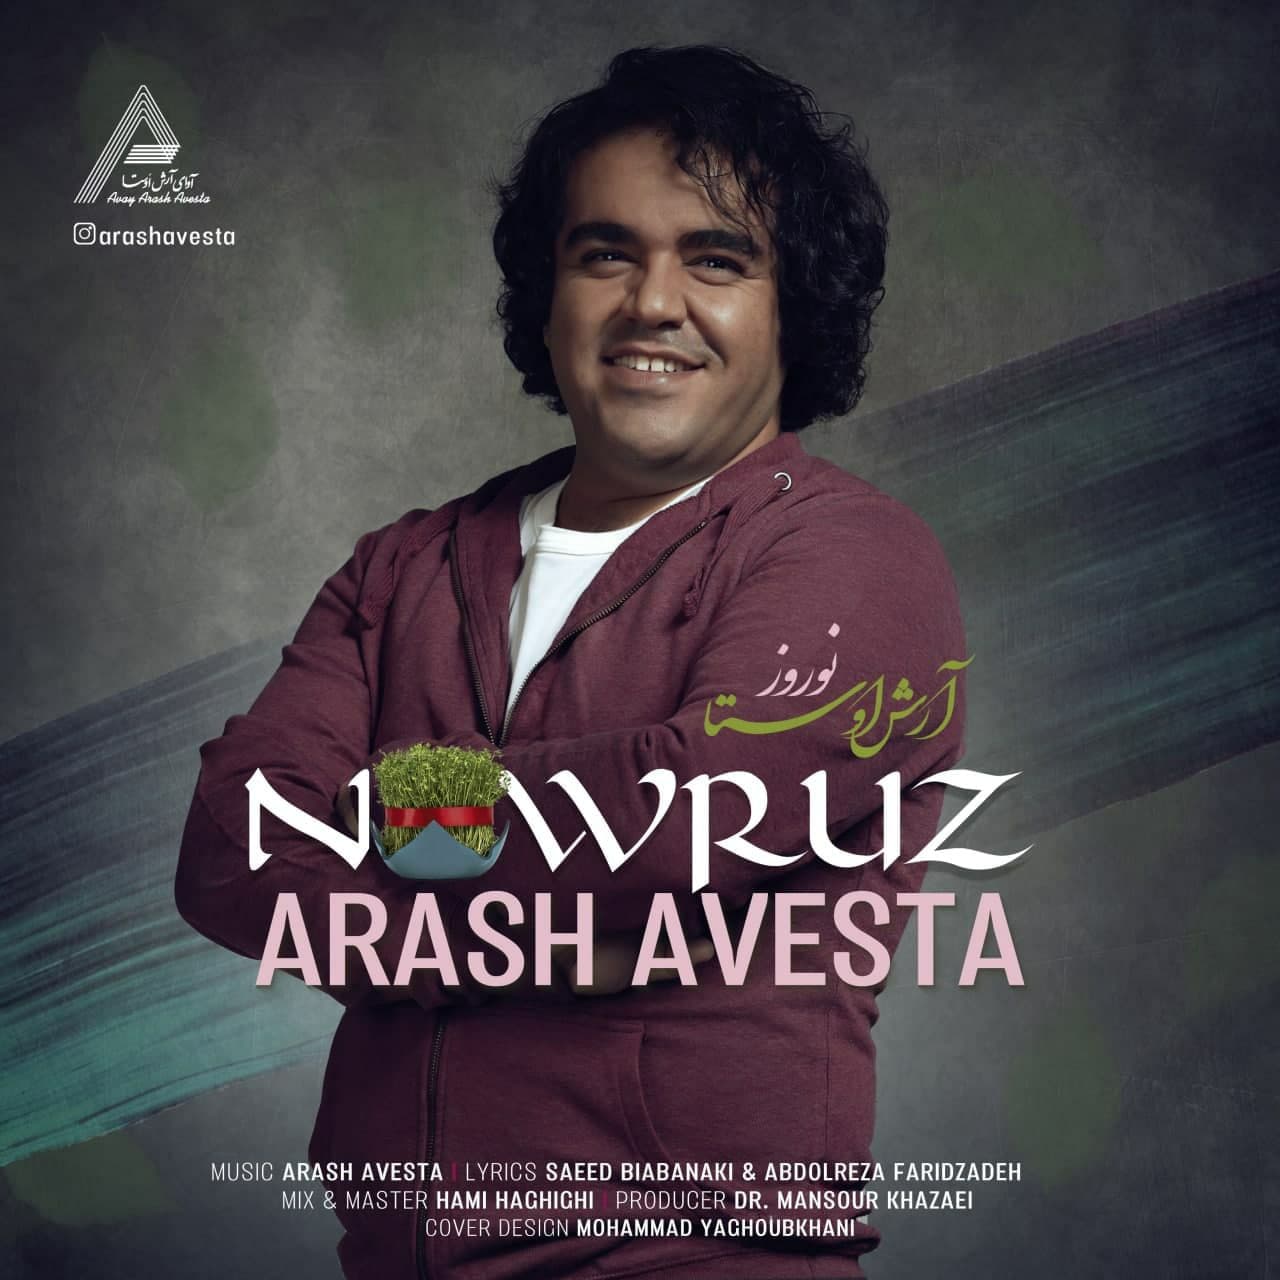 Arash Avesta - Nowruz